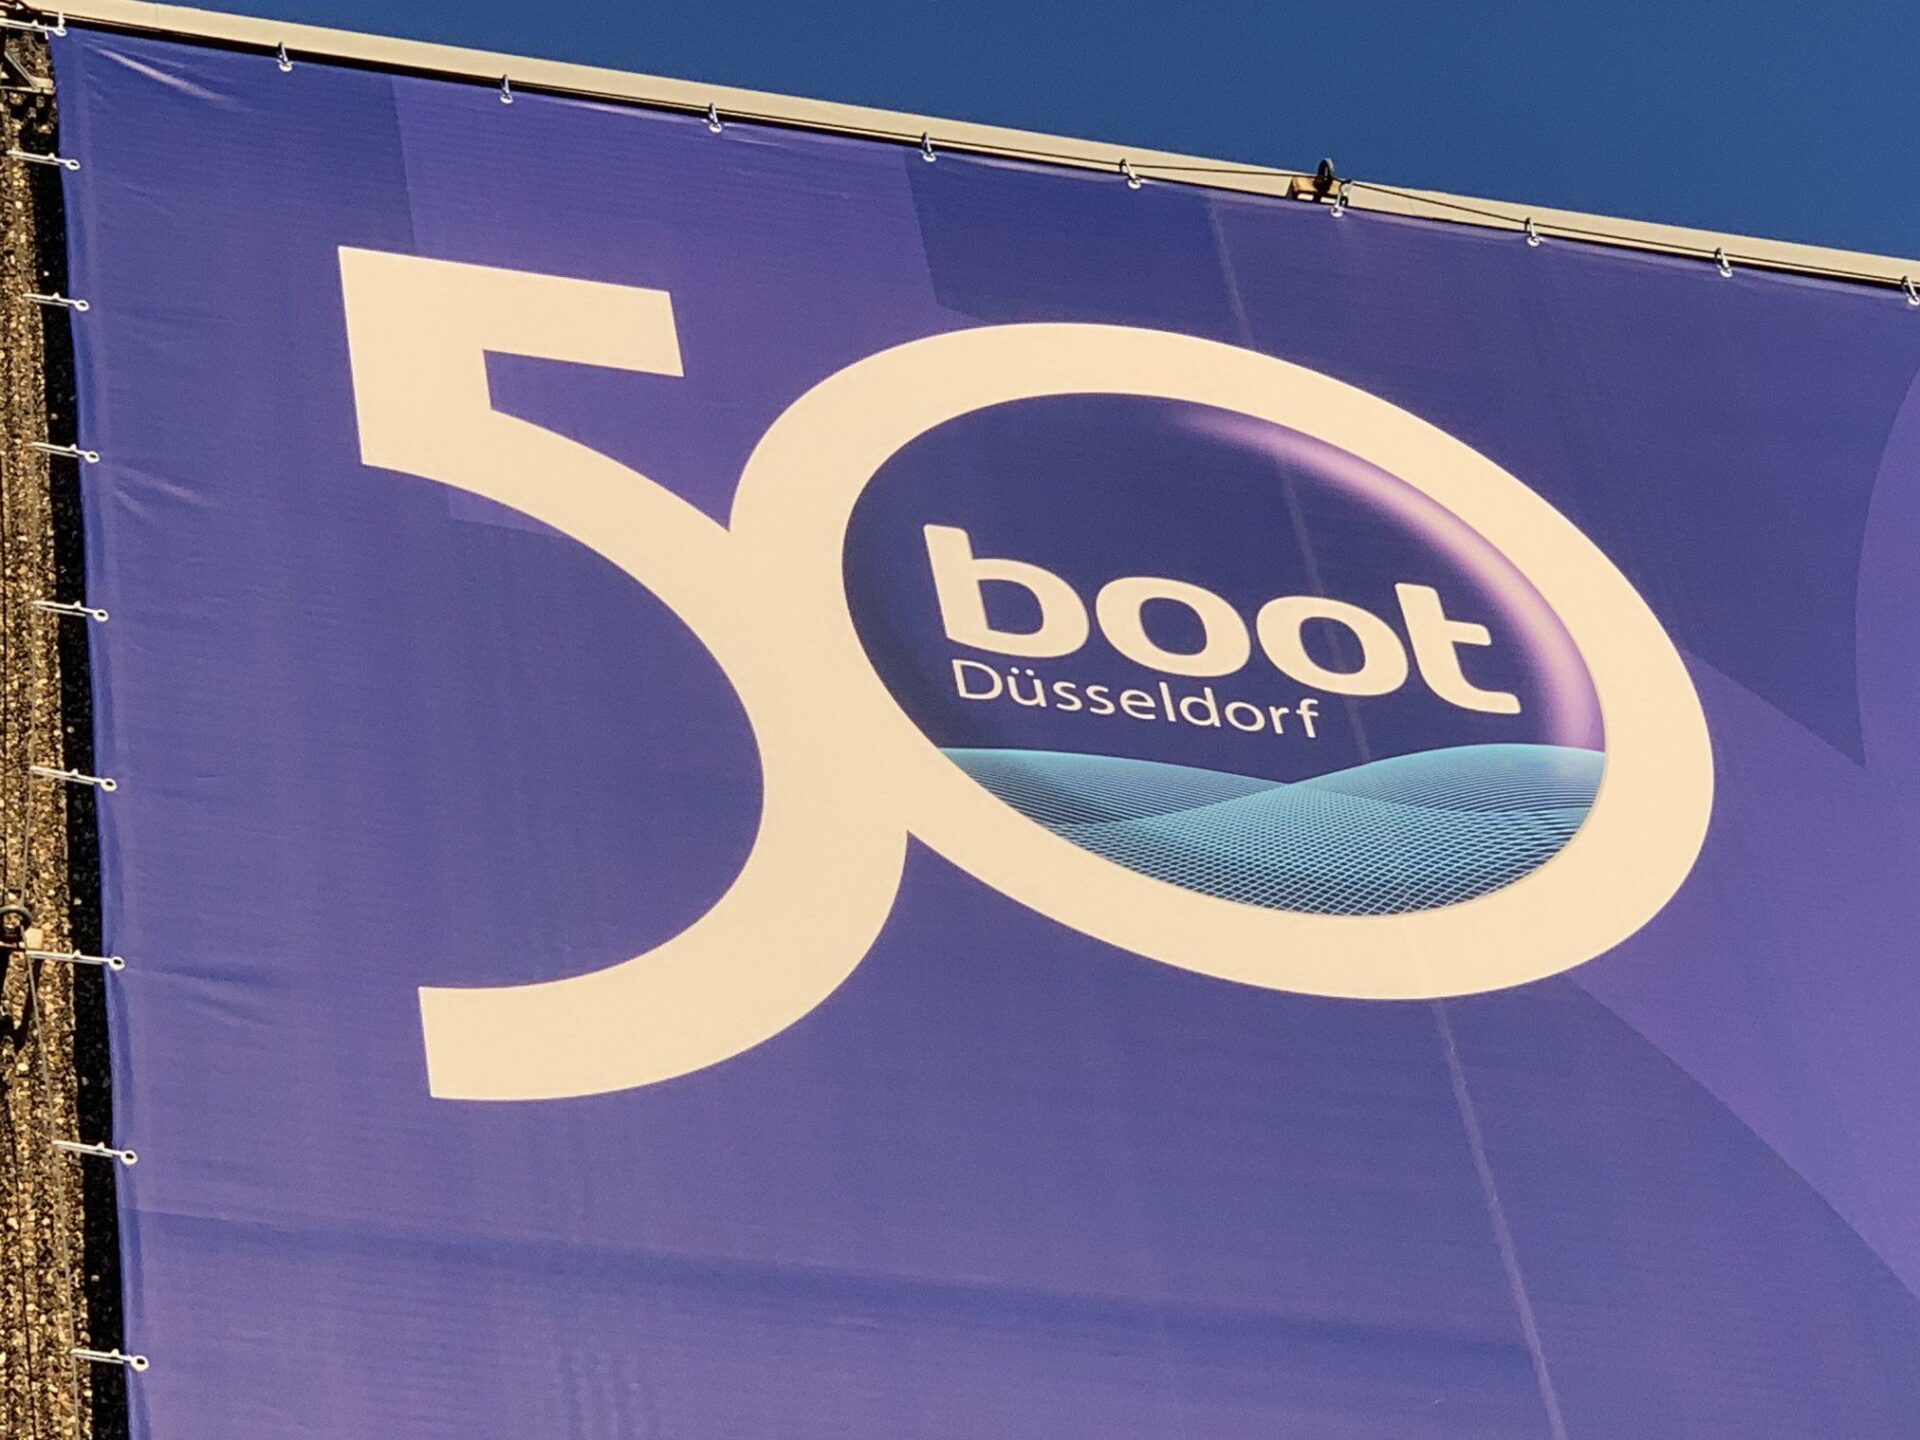 Dusseldorf BOOT